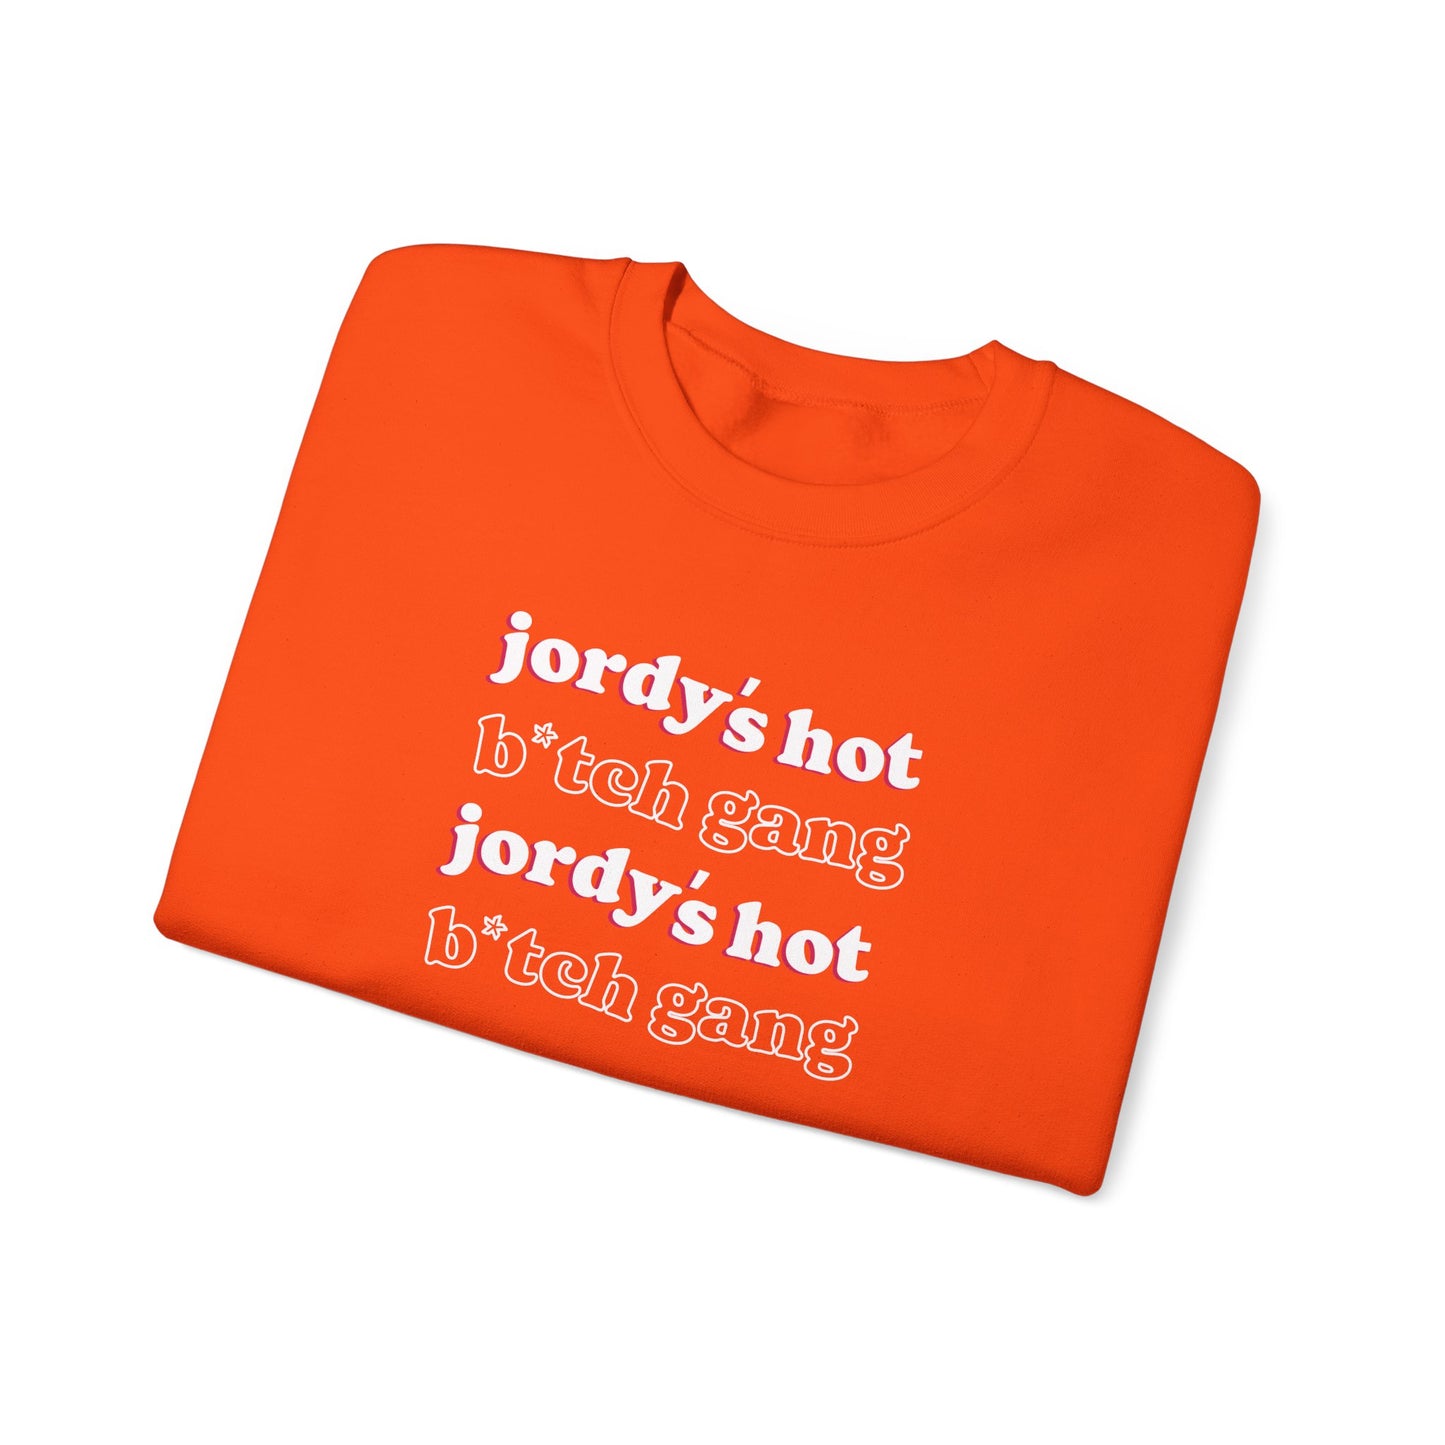 jordy's hot b*tch gang Crewneck Sweatshirt